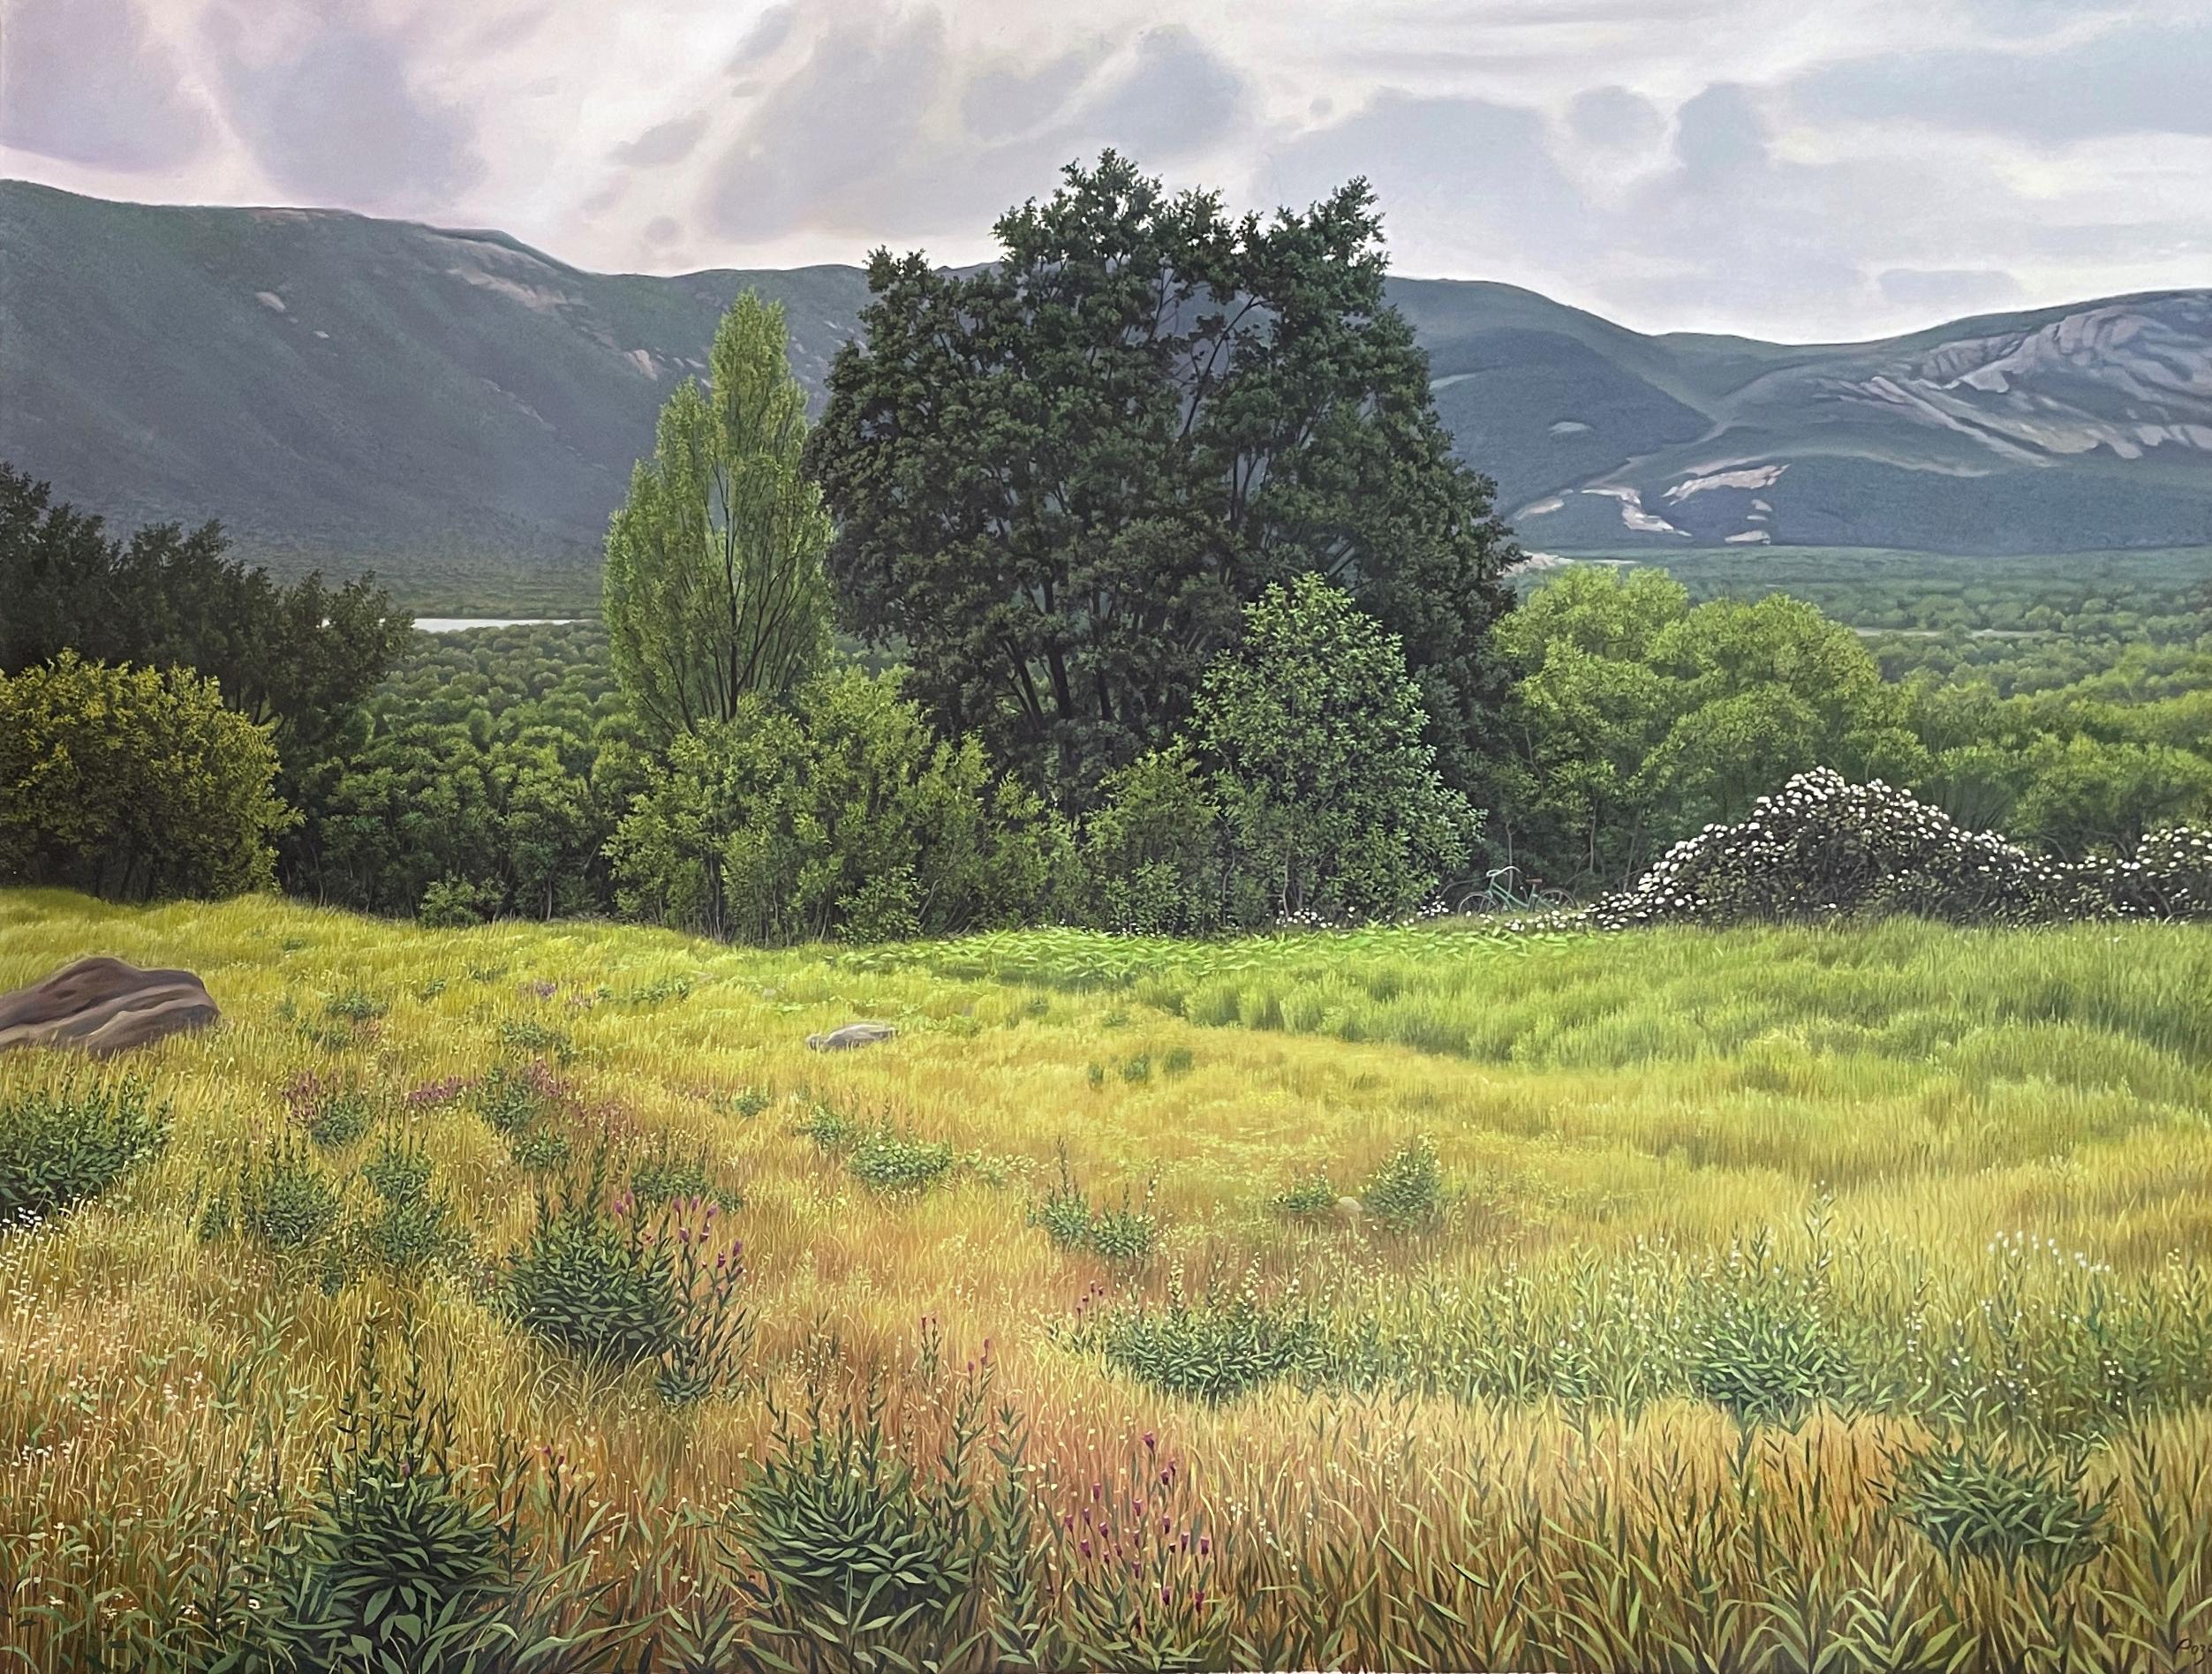 René Monzón Relova “Pozas” Landscape Painting - Unpredictable Valley - Highly Detailed Lush Landscape, Golden Field & Mountains